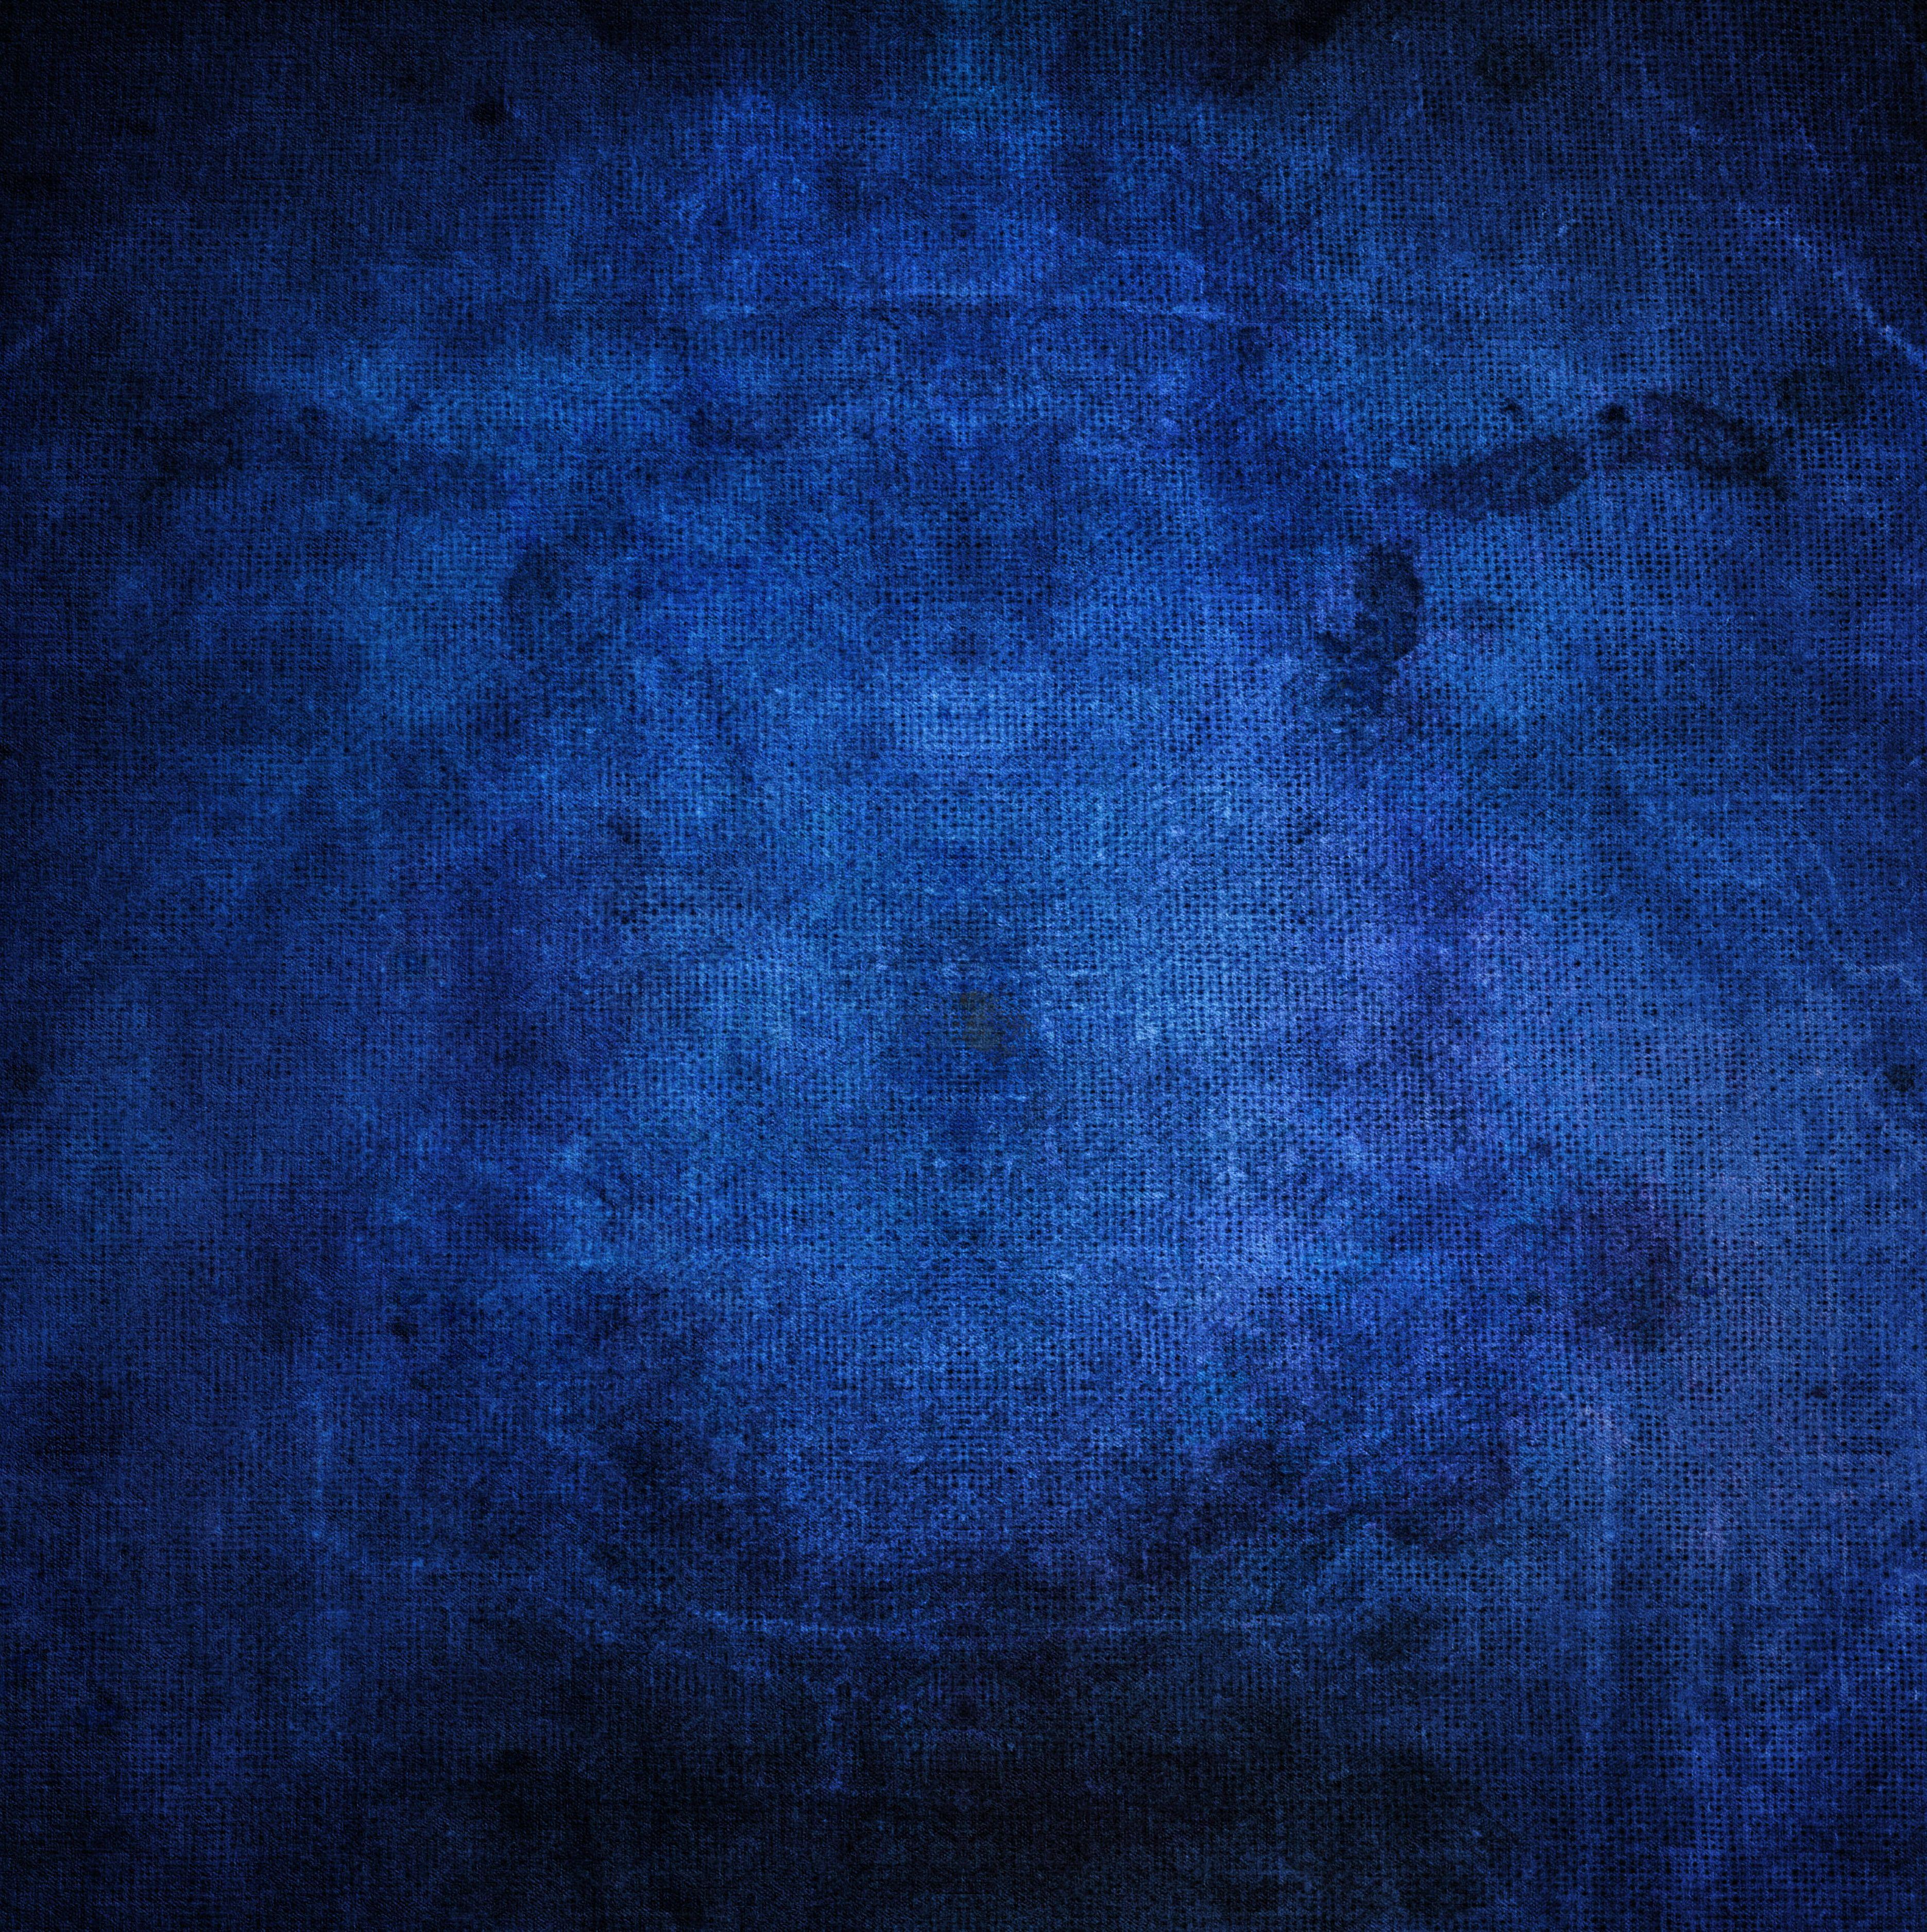 deep blue abstract grunge texture. Free